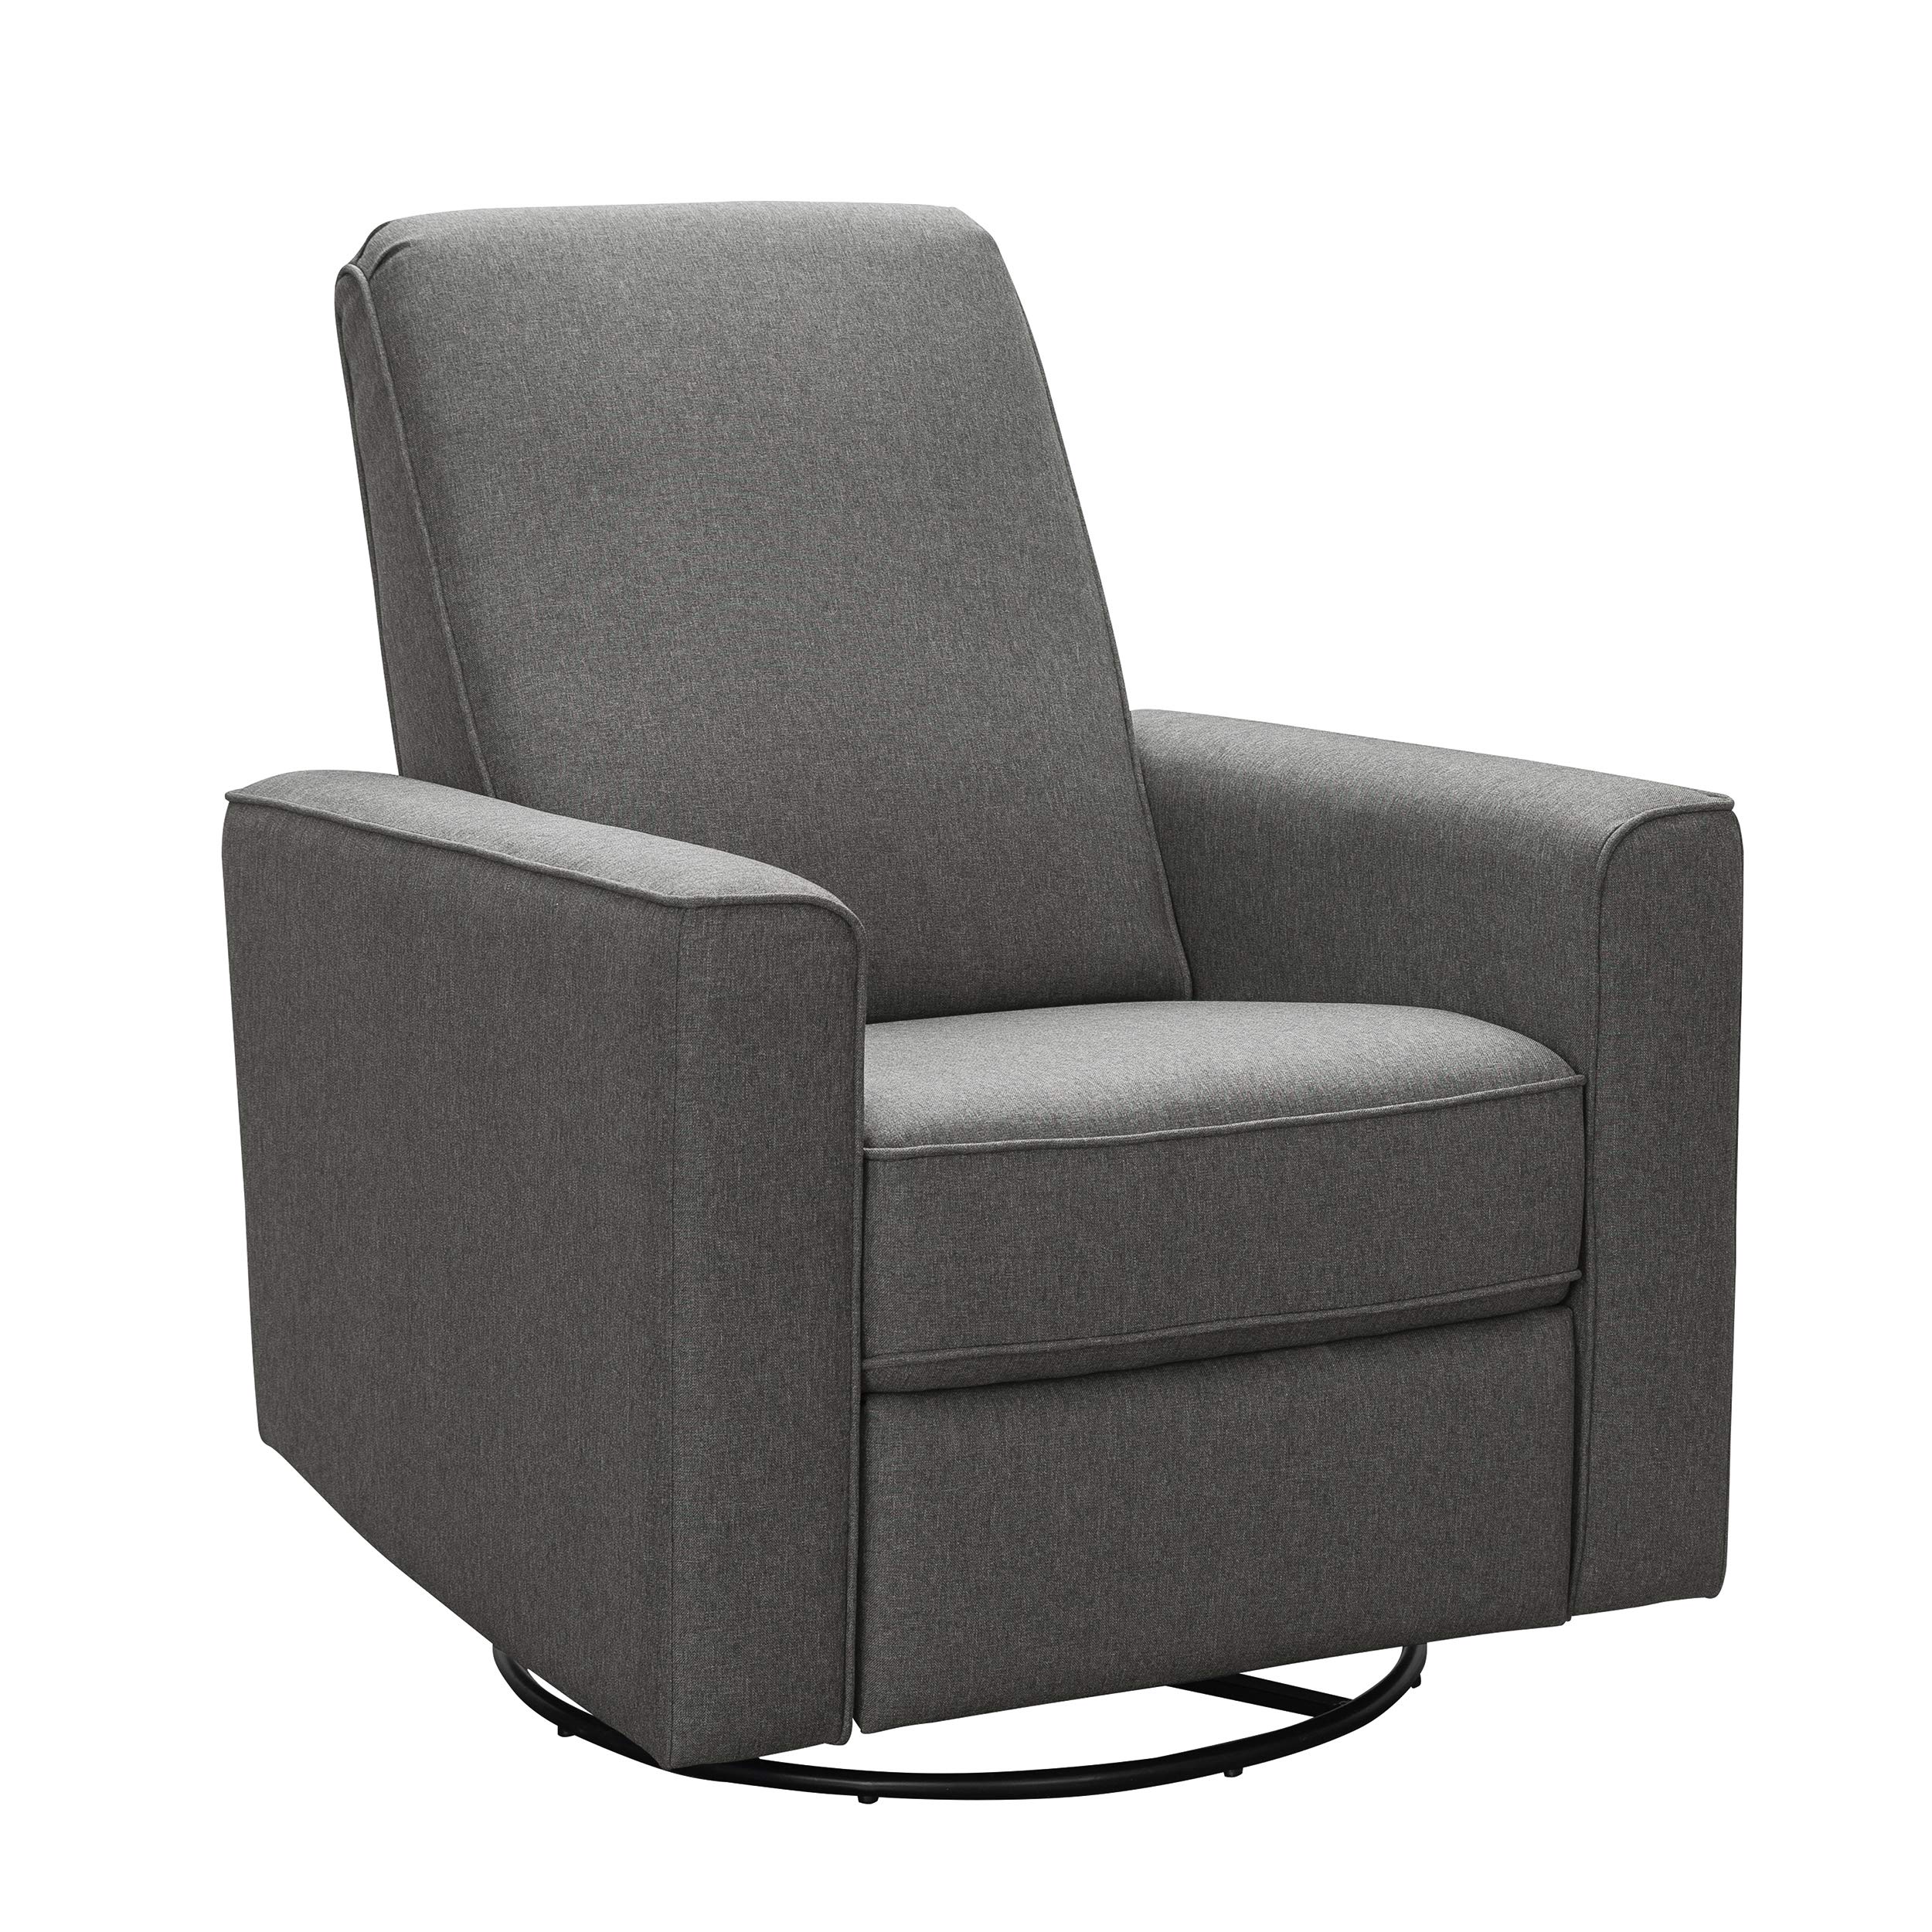 Abbyson Living Hampton Swivel Glider Nursery Recliner - Upholstered, Fully Padded, Reclining Rocking Chair, Grey